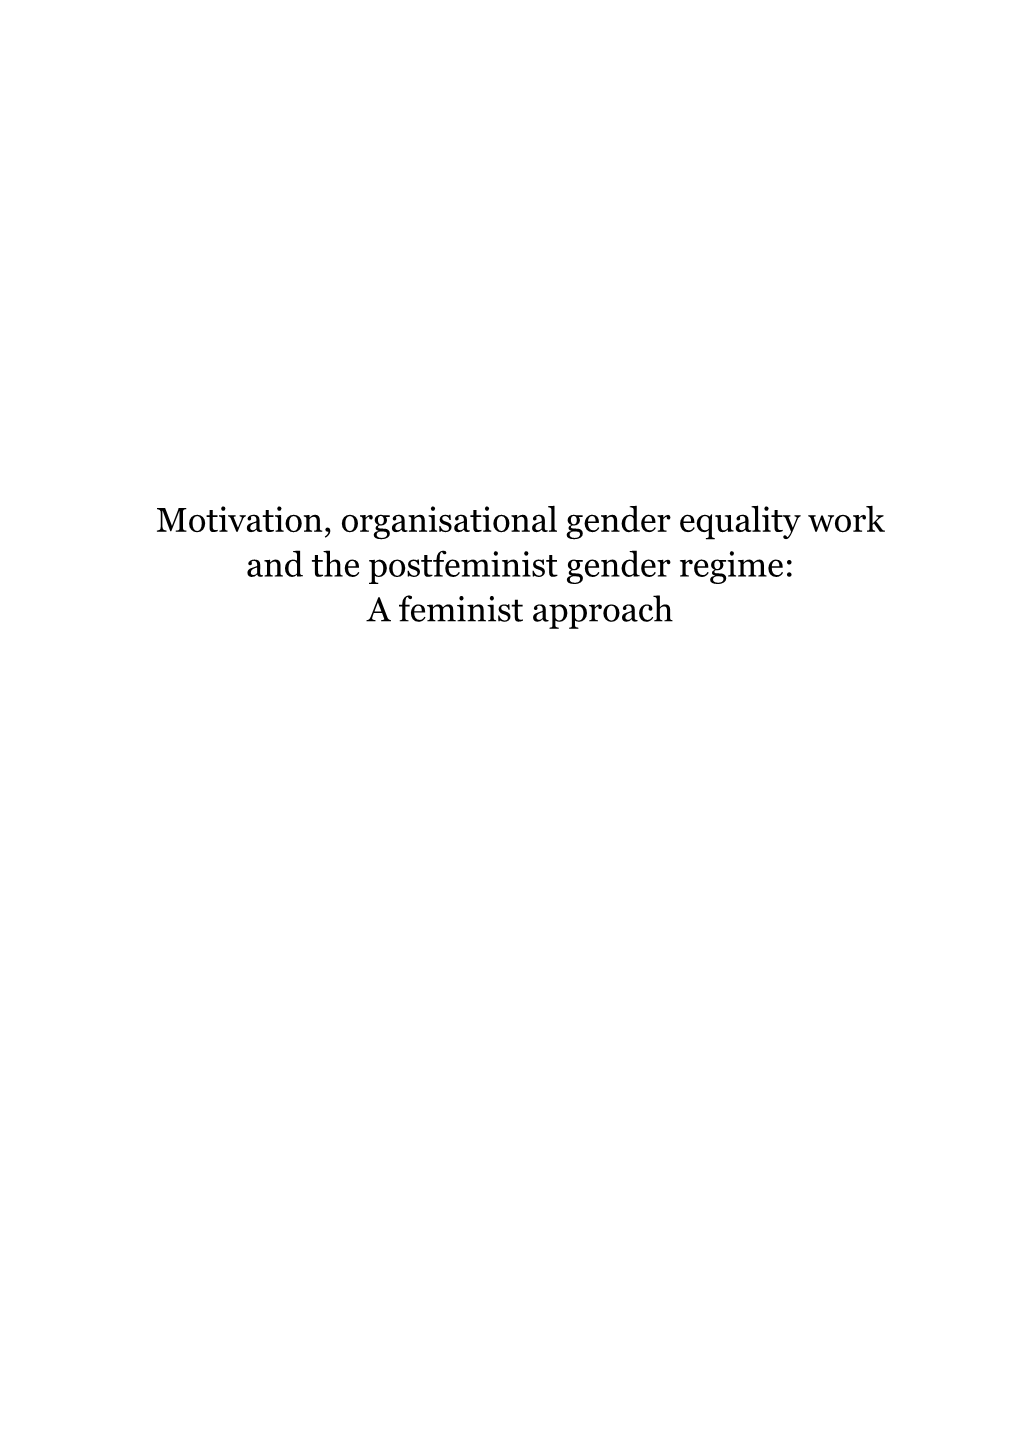 Motivation, Organisational Gender Equality Work and the Postfeminist Gender Regime: a Feminist Approach